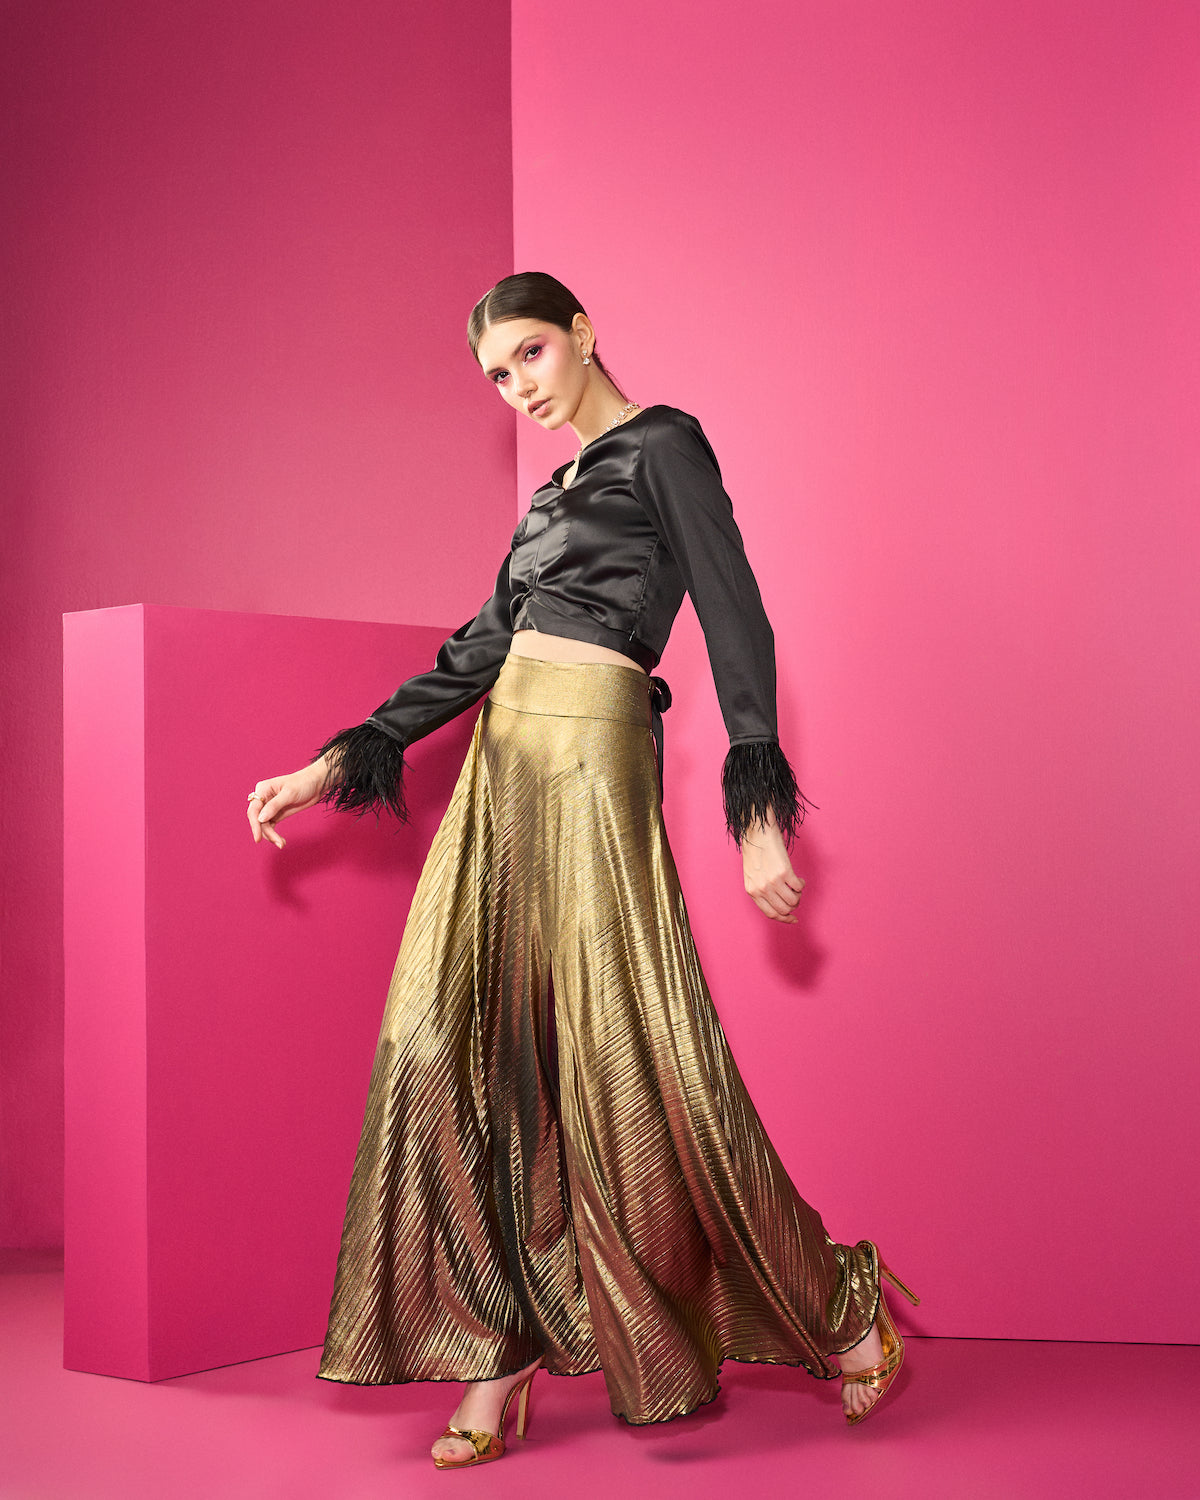 Mettalic gold slit skirt with black fur top